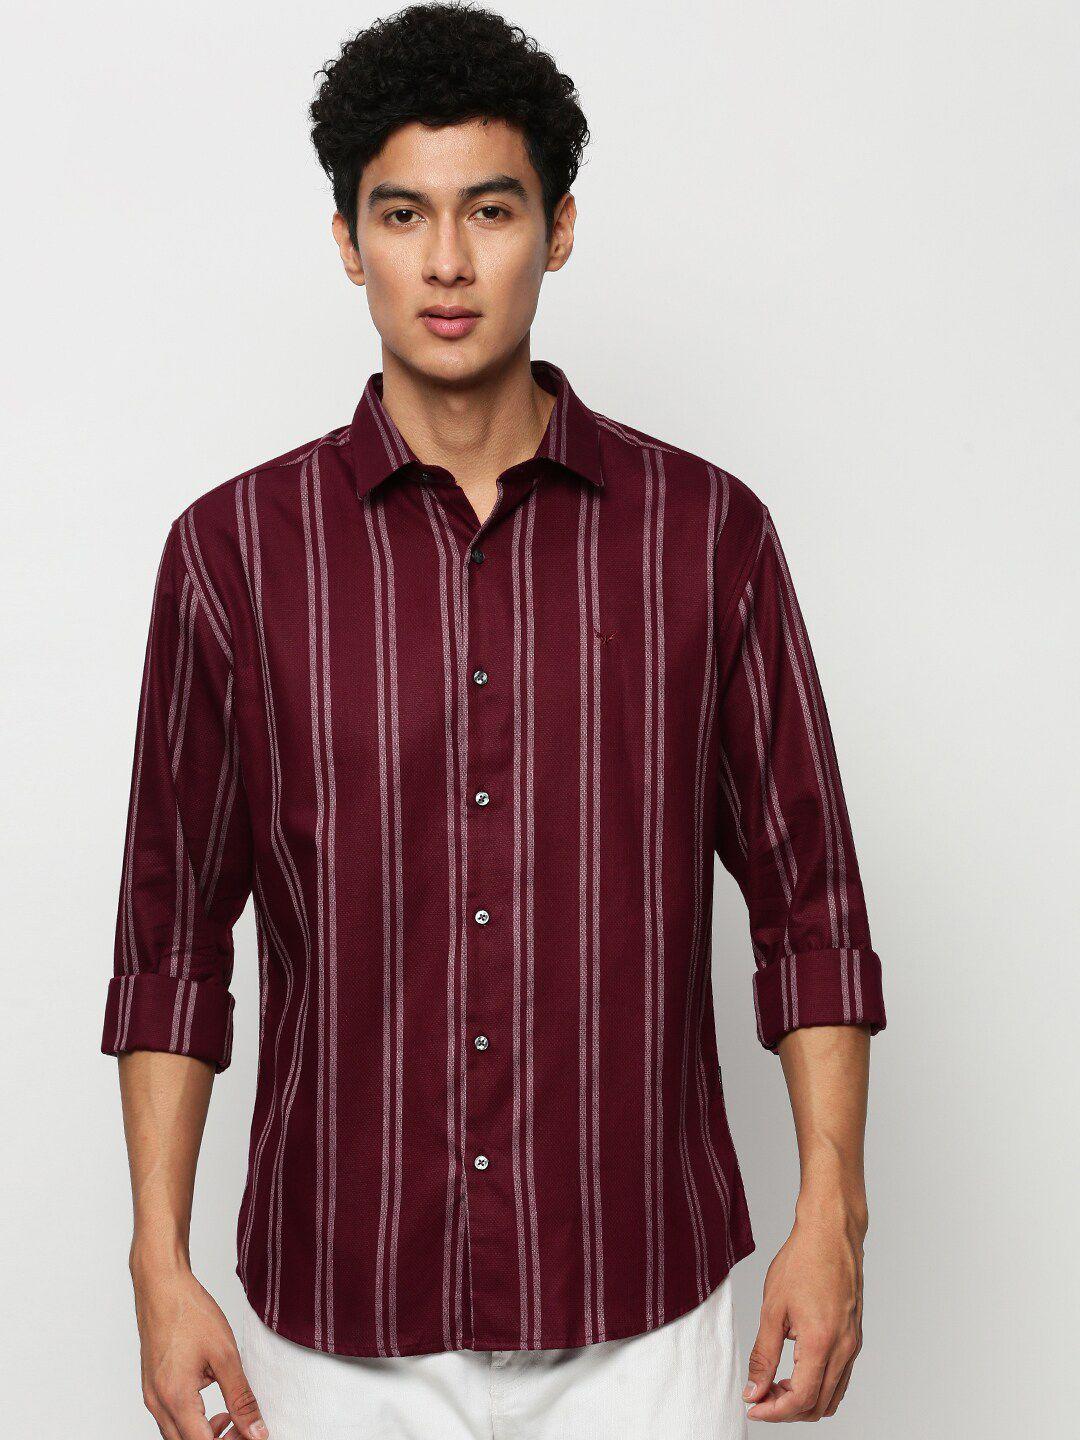 showoff striped cotton premium slim fit opaque casual shirt